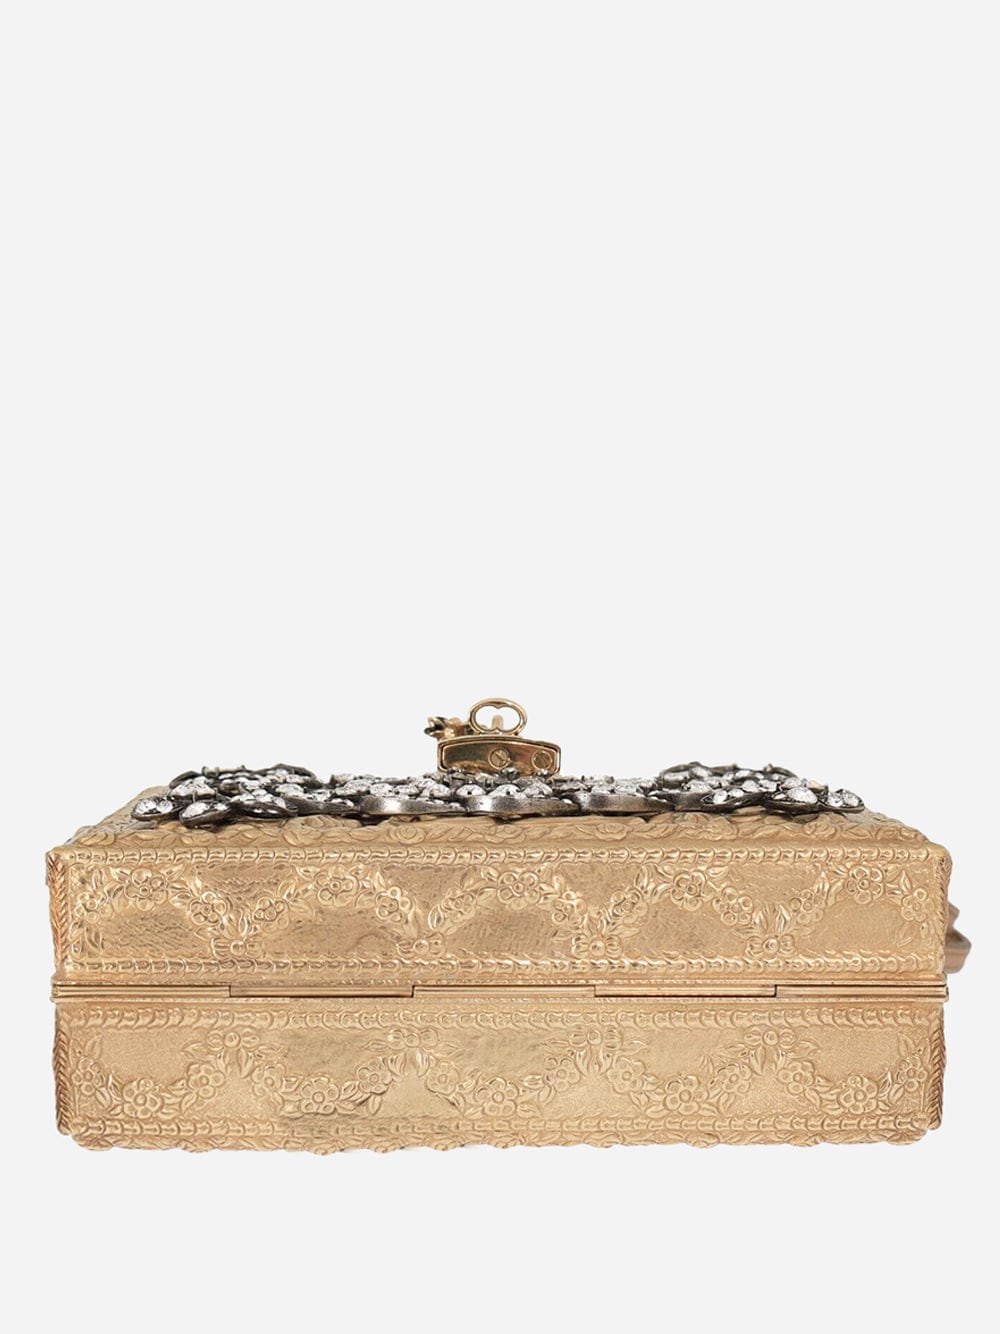 Dolce & Gabbana Jewel Embellished Dolce Box